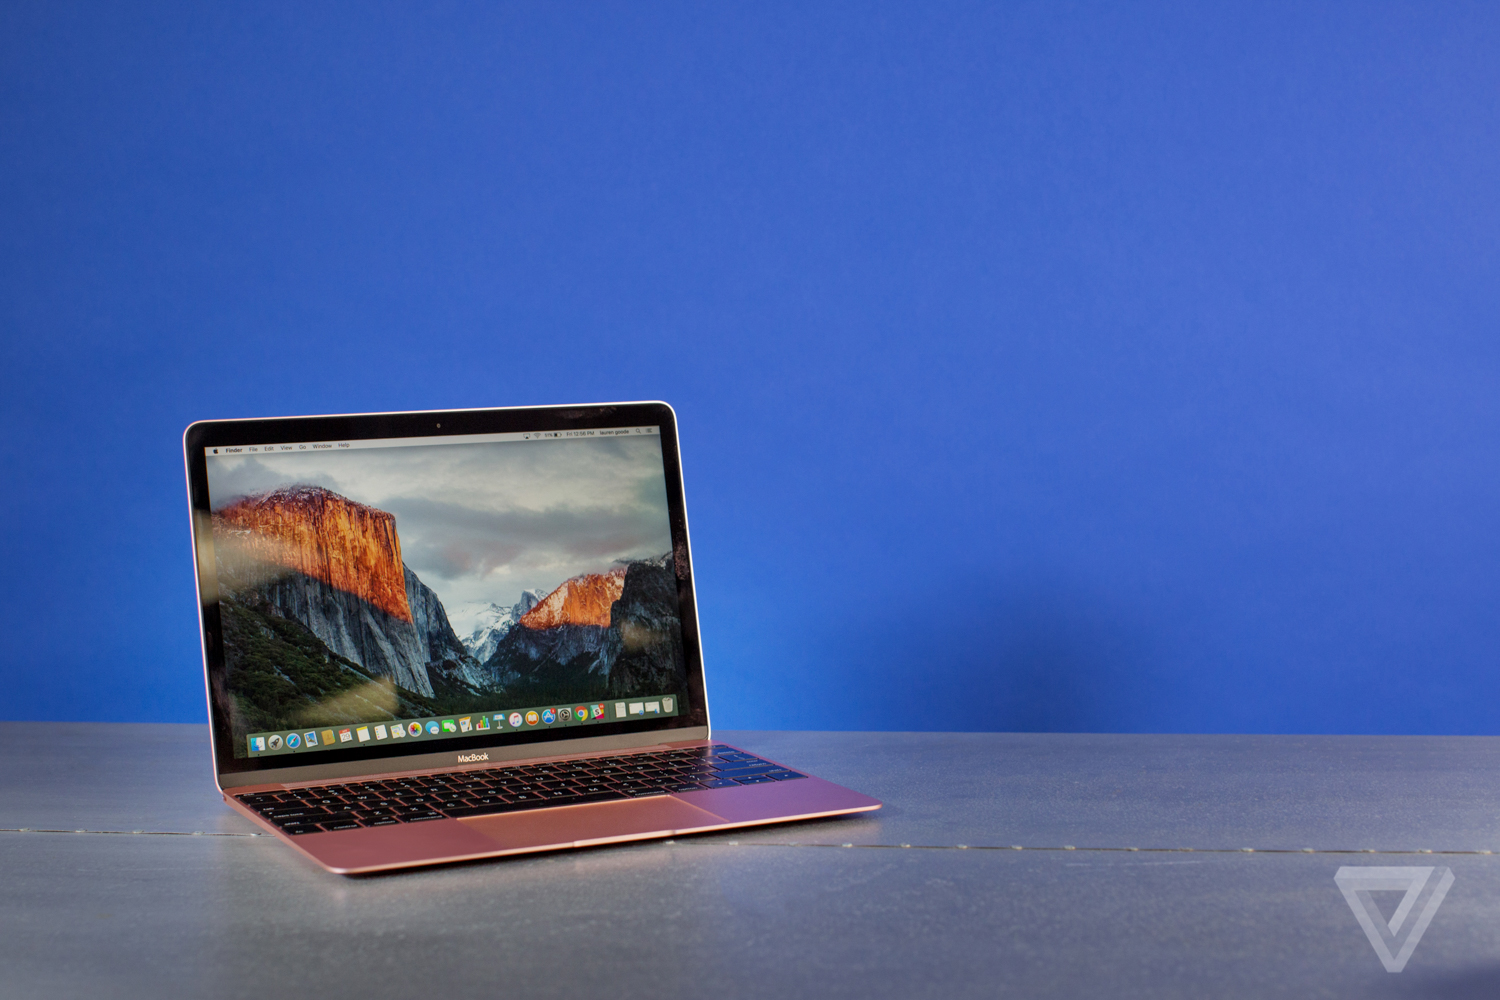 Macbook-2016-apple-laptop-pink-rose-gold